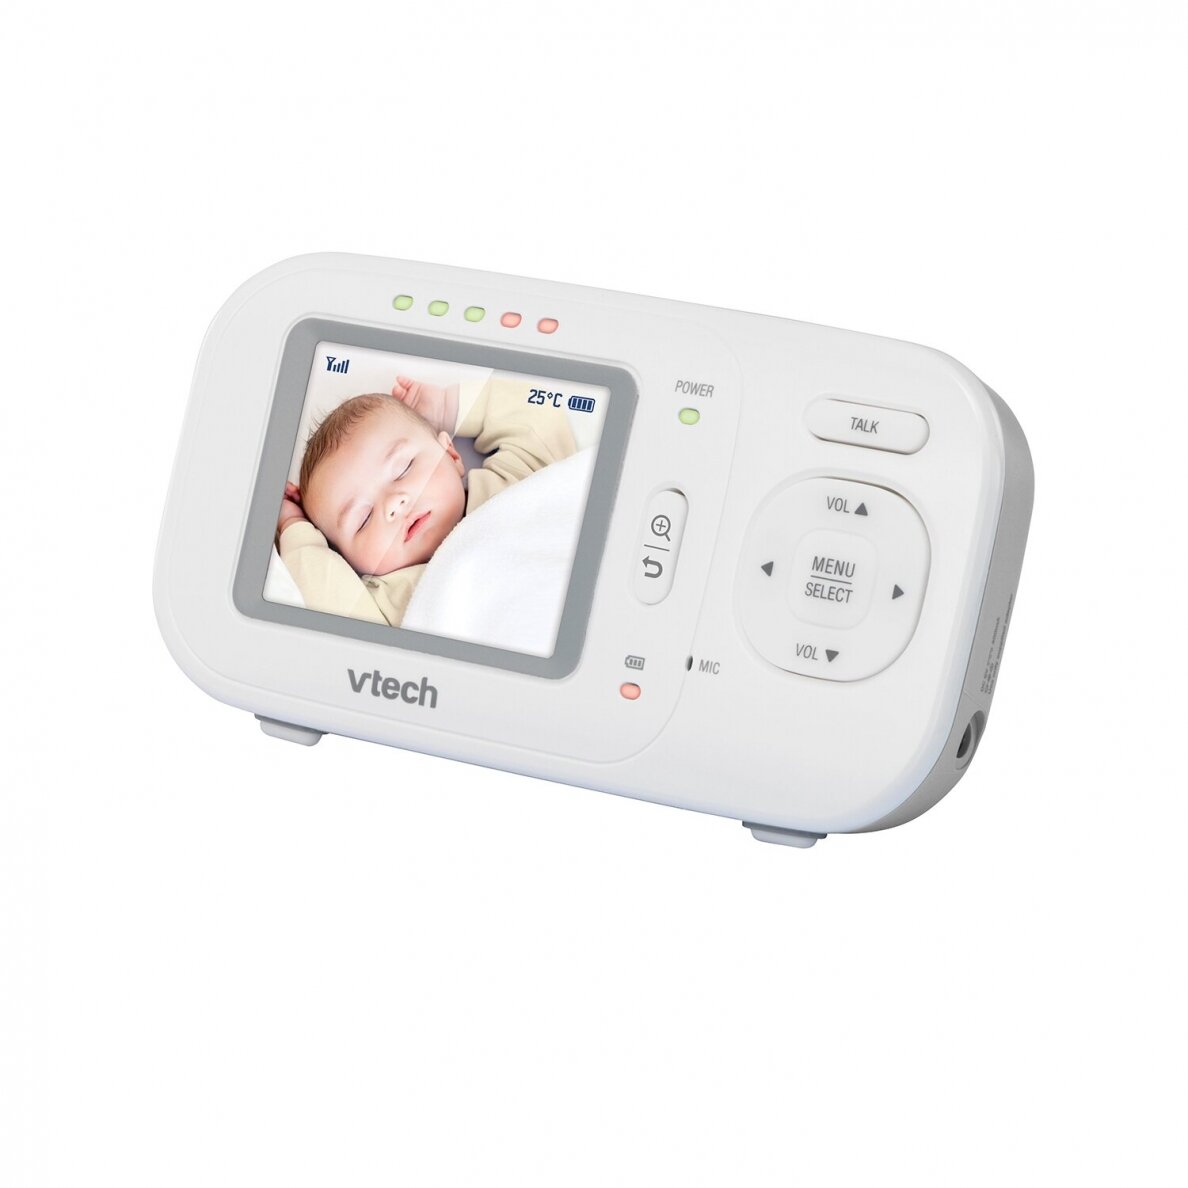 Vtech VM2251 Video Baby Monitor 2.4" LCD